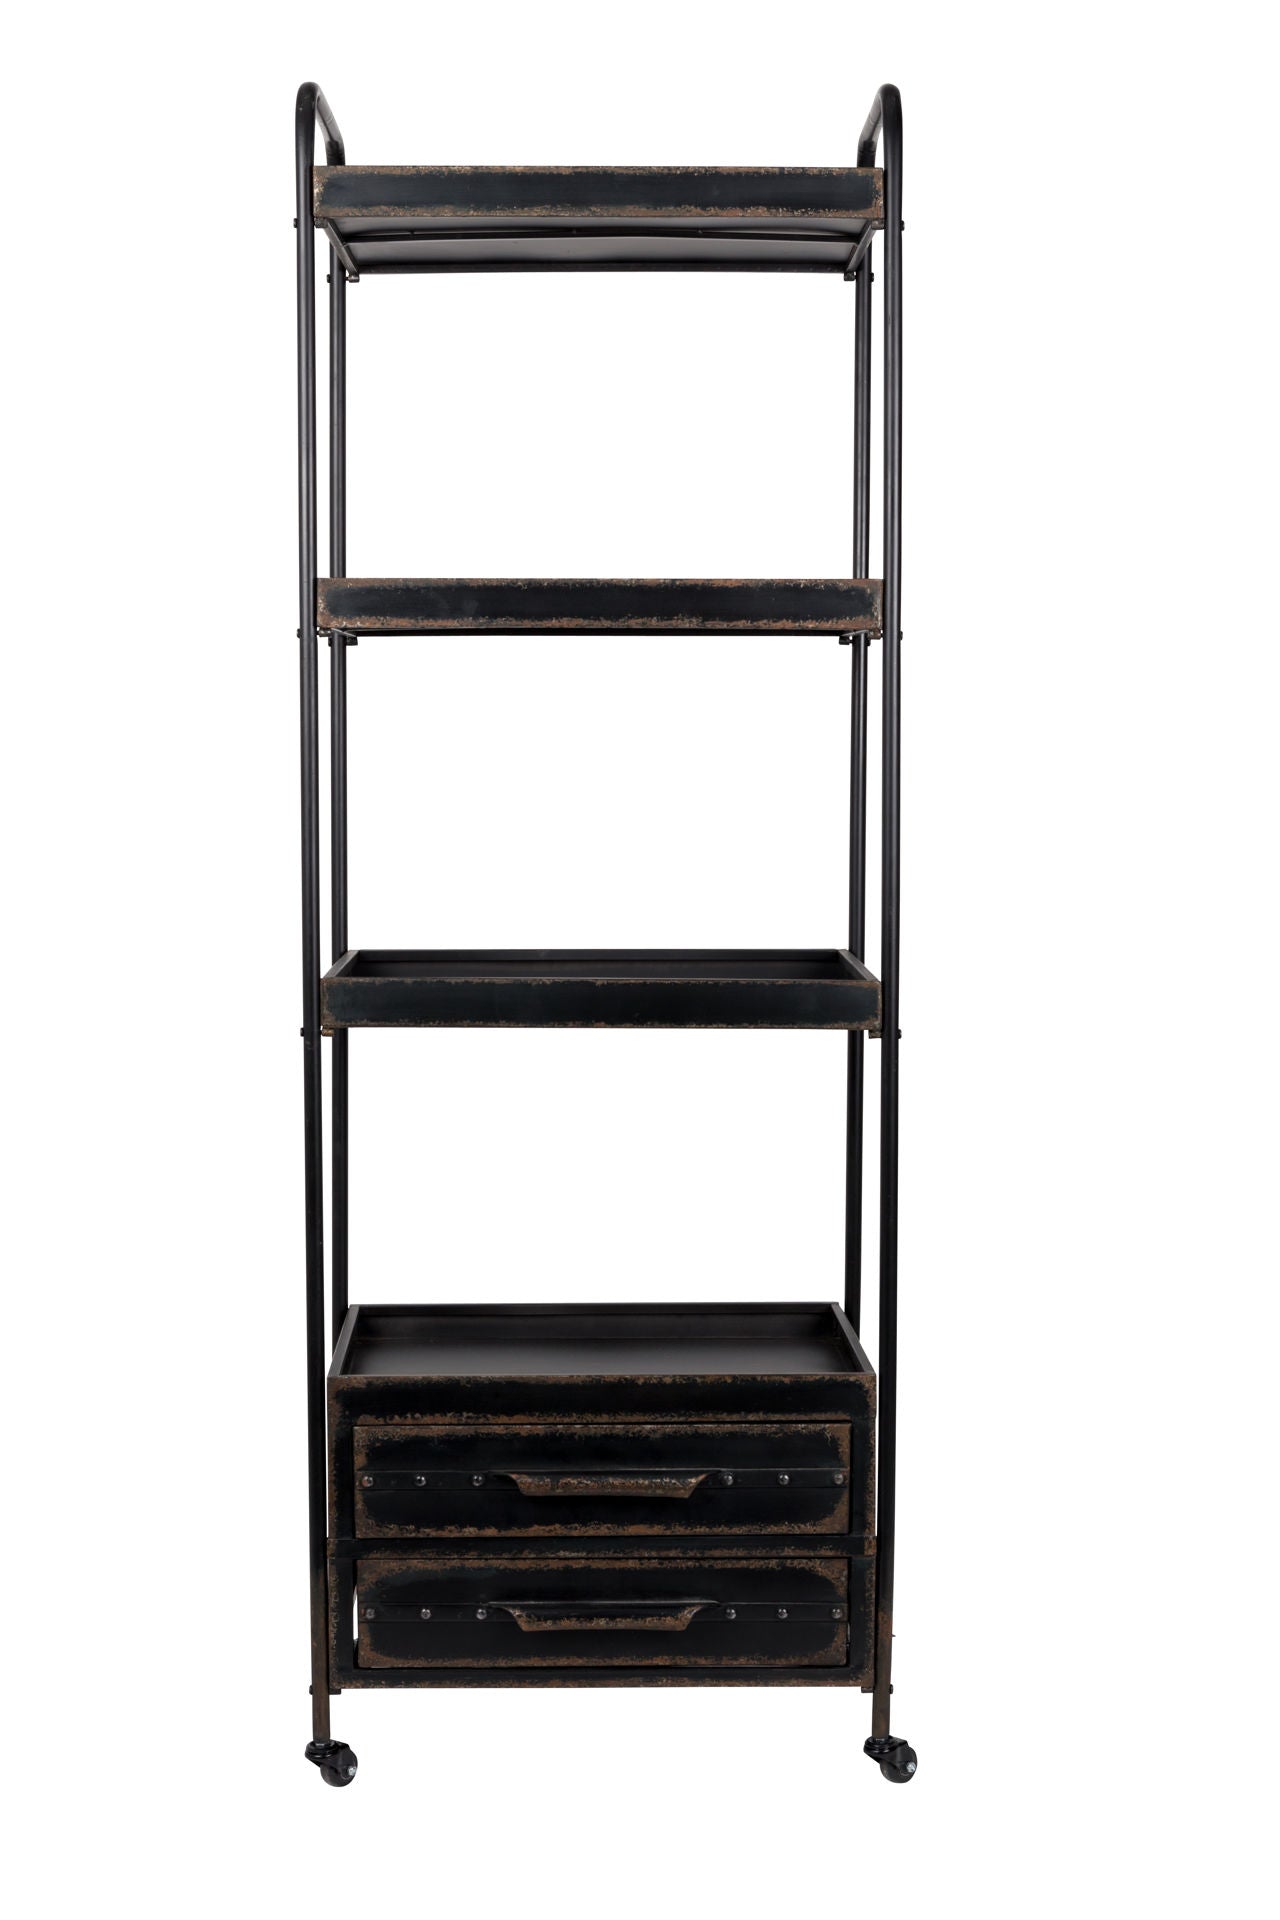 Nancy's Roma Plank - Industrial - Black, Brown - Iron, Wood, Plastic - 33 cm x 48.5 cm x 11 cm